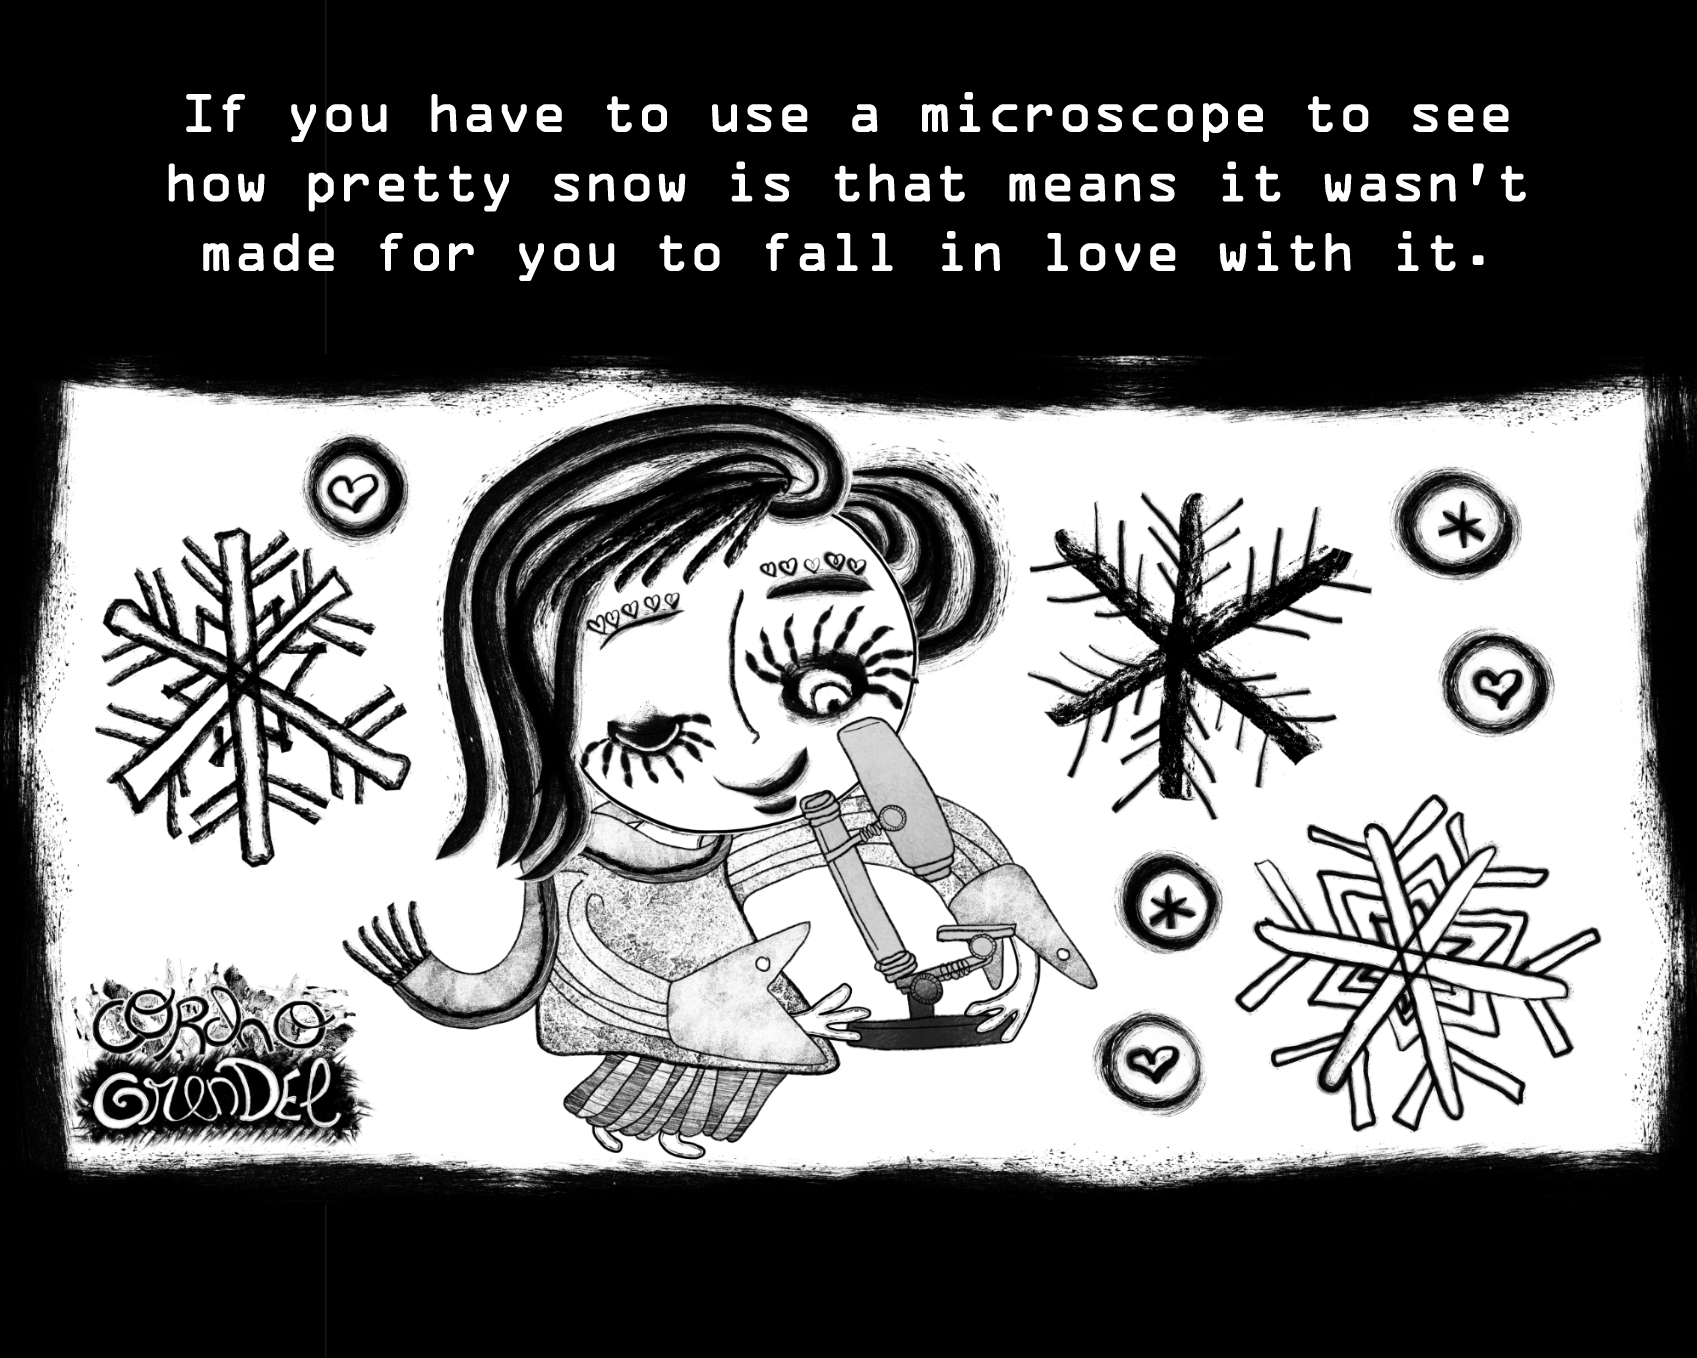 CorchoGrendel-Meteo-DIC-Nieve-microscopio-ENG